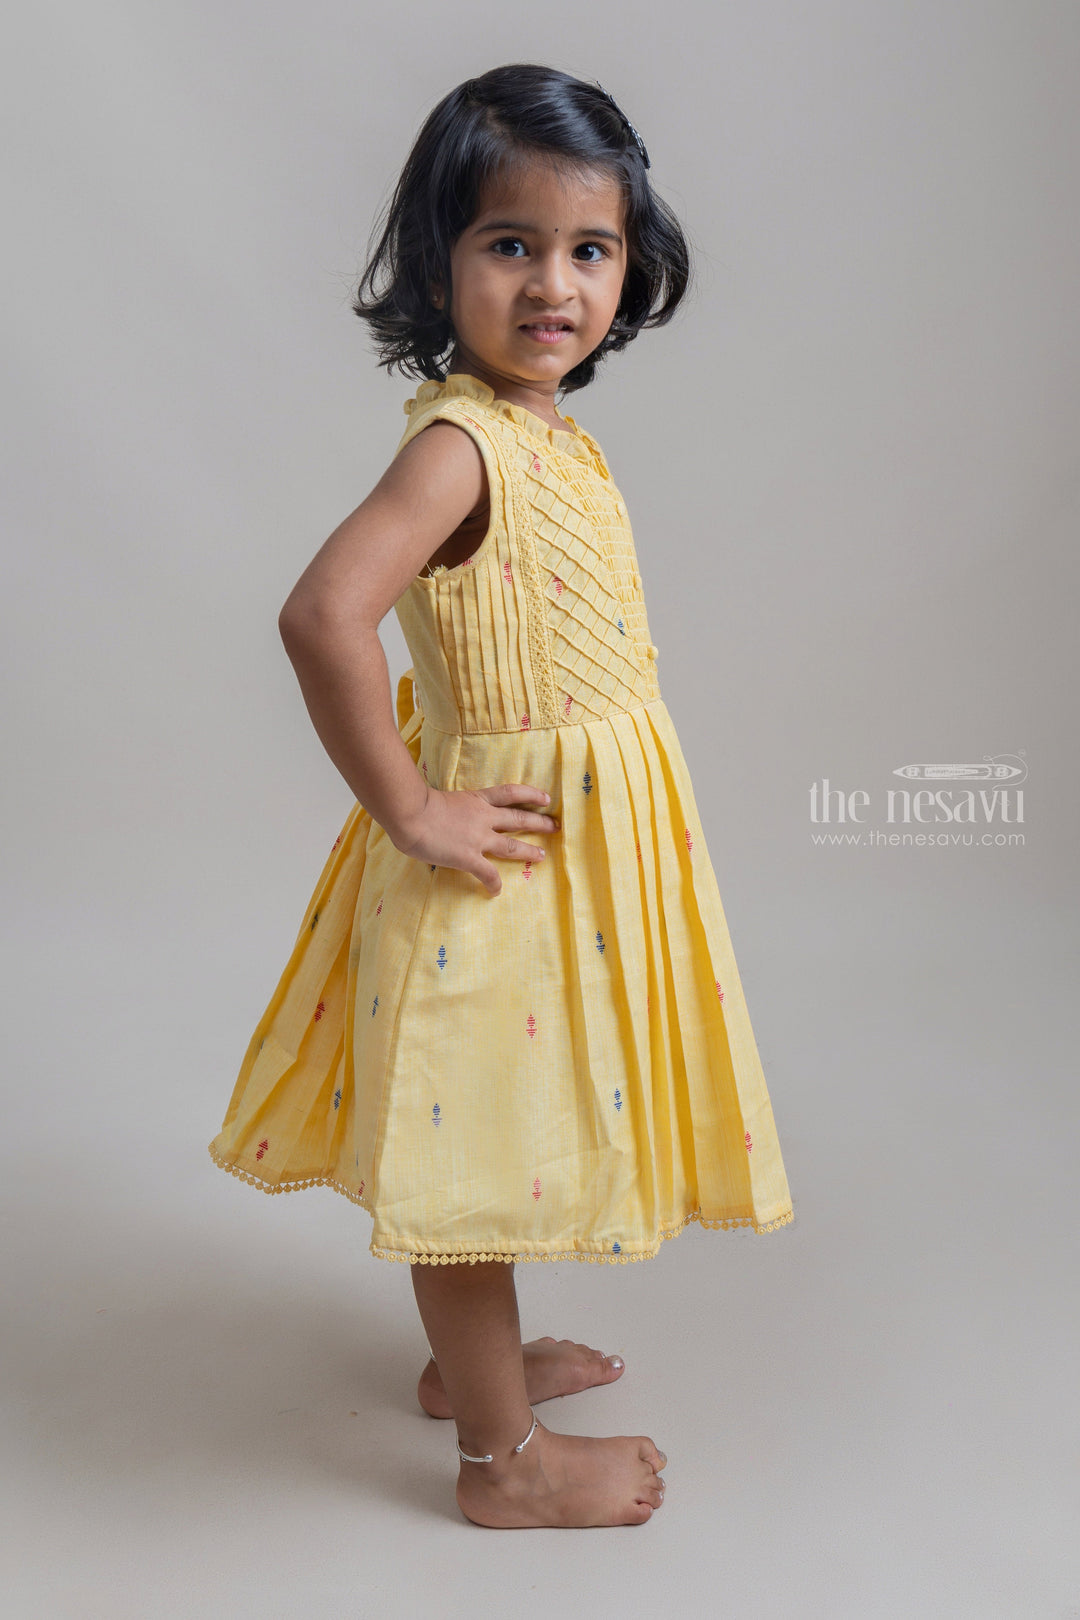 The Nesavu Frocks & Dresses Charming Yellow Sleeveless Pleated Casual Cotton Frock For Girls psr silks Nesavu